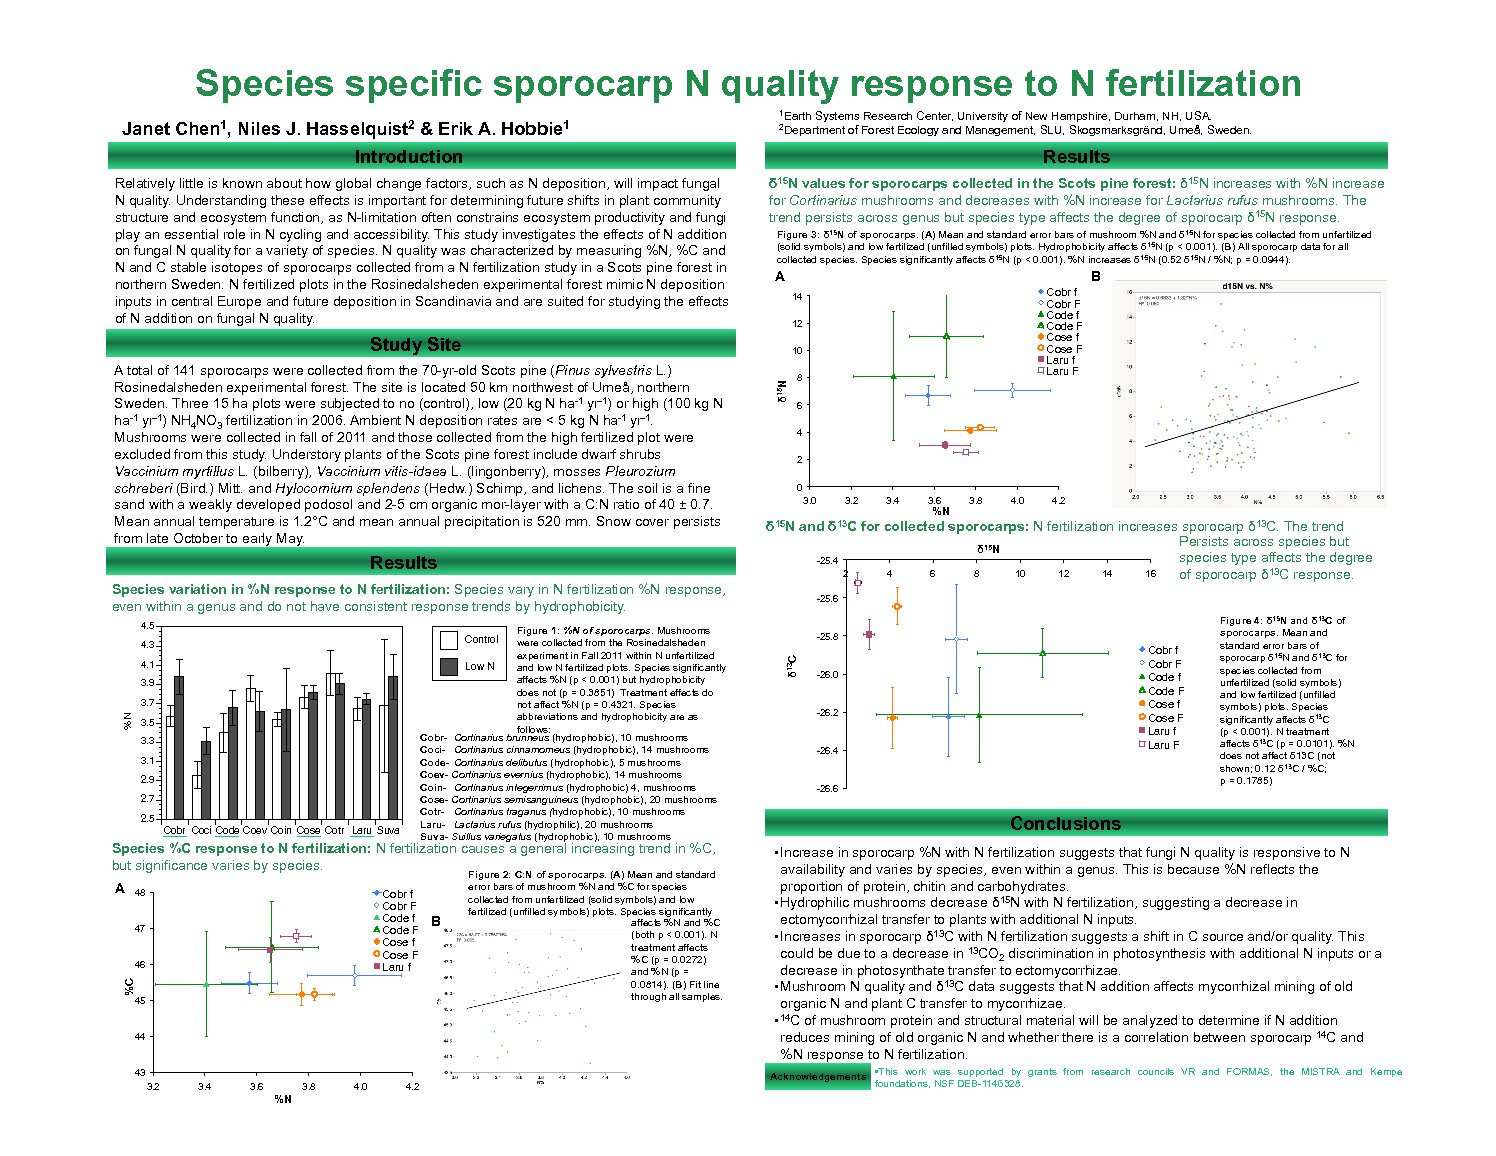 Species Specific Sporocarp N Quality Response To N Fertilization by jchen13